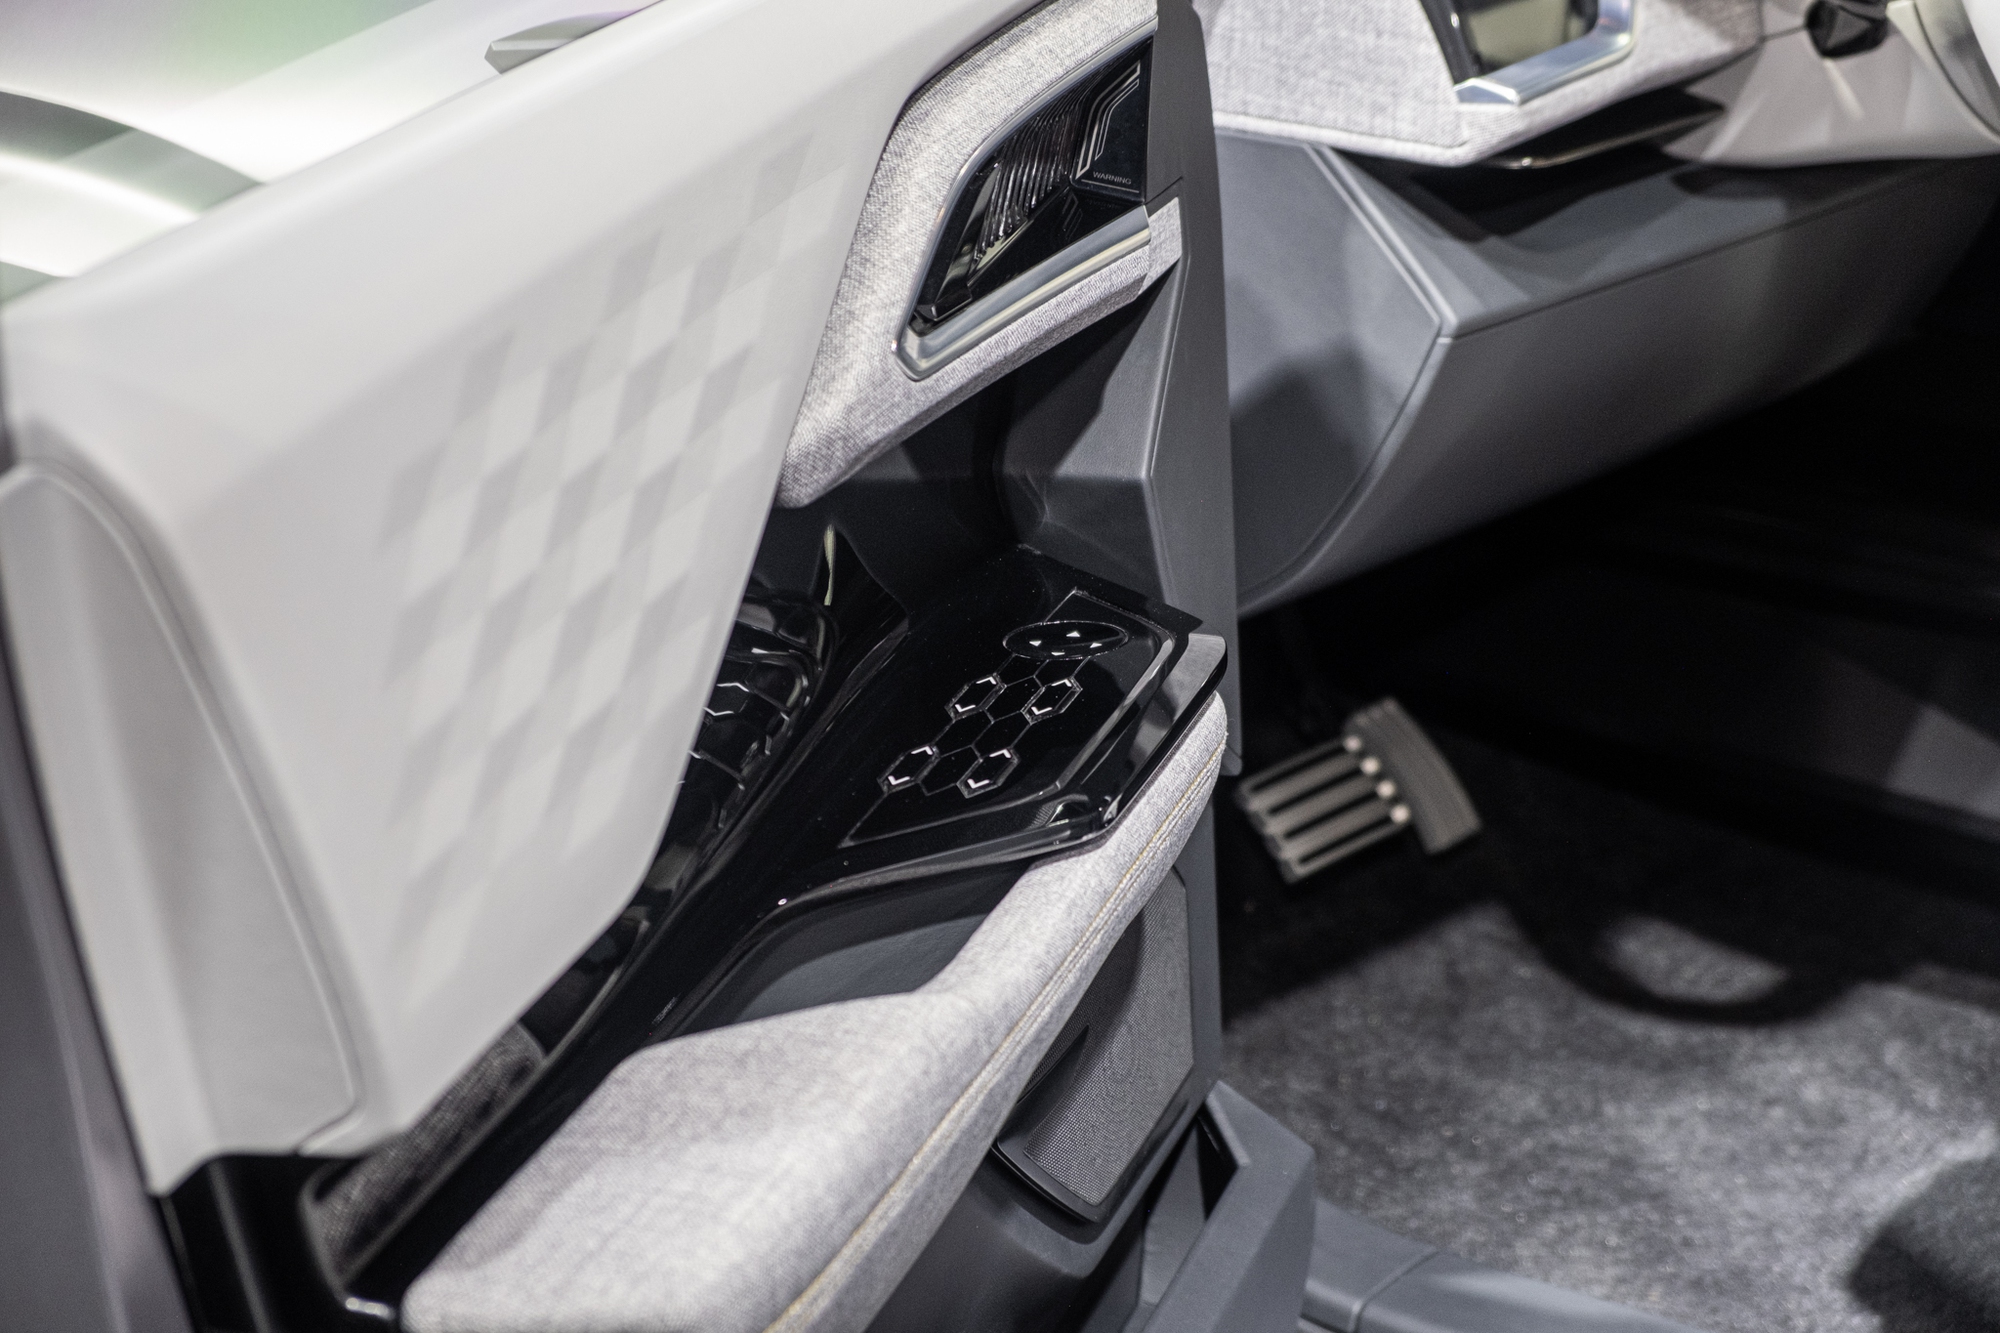 Ảnh 360 độ Mitsubishi XFC Concept: Soi từ gầm lên cửa sổ trời giọt nước - Ảnh 14.